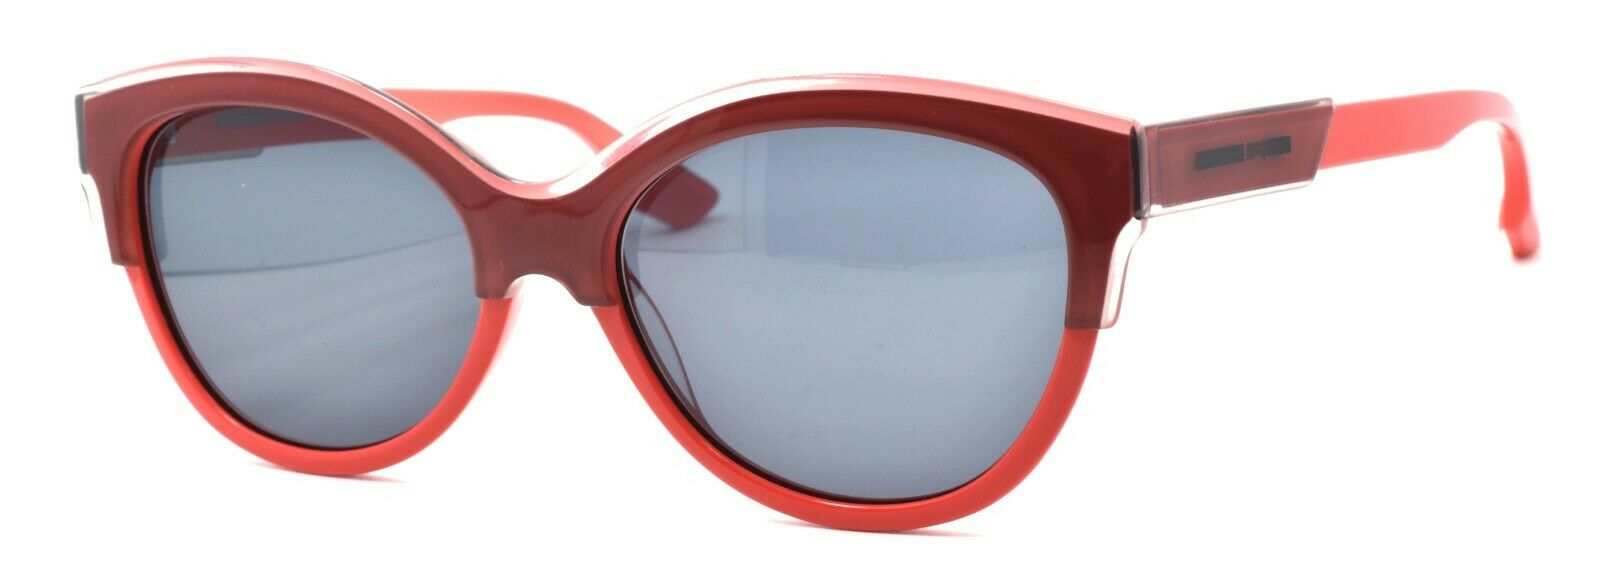 1-McQ Alexander McQueen MQ0026O 003S Women's Sunglasses Cat-eye Pink Coral / Grey-191966062420-IKSpecs